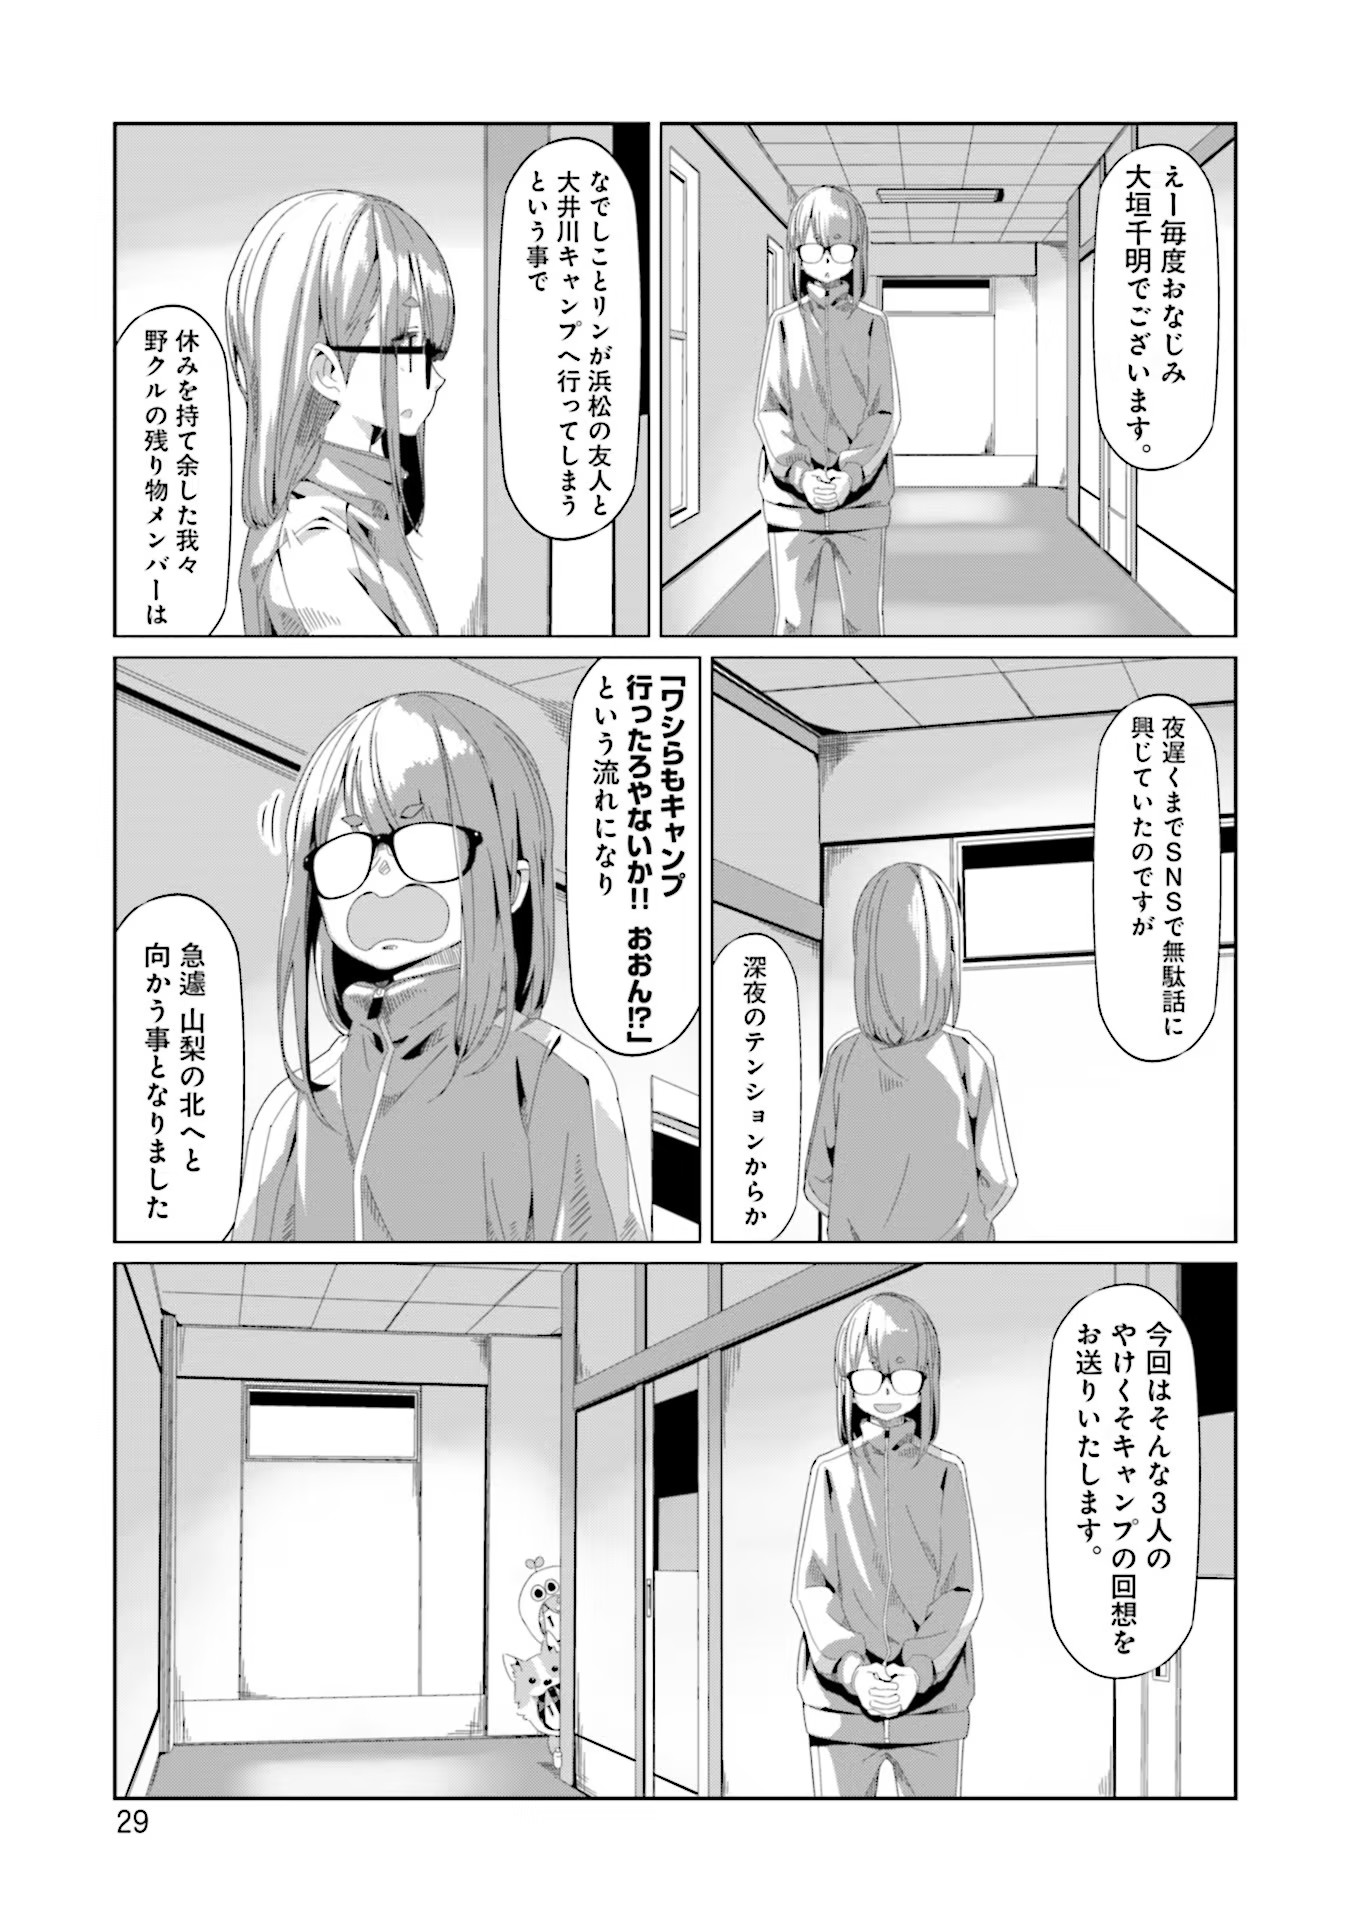 Yuru Camp - Chapter 65 - Page 1